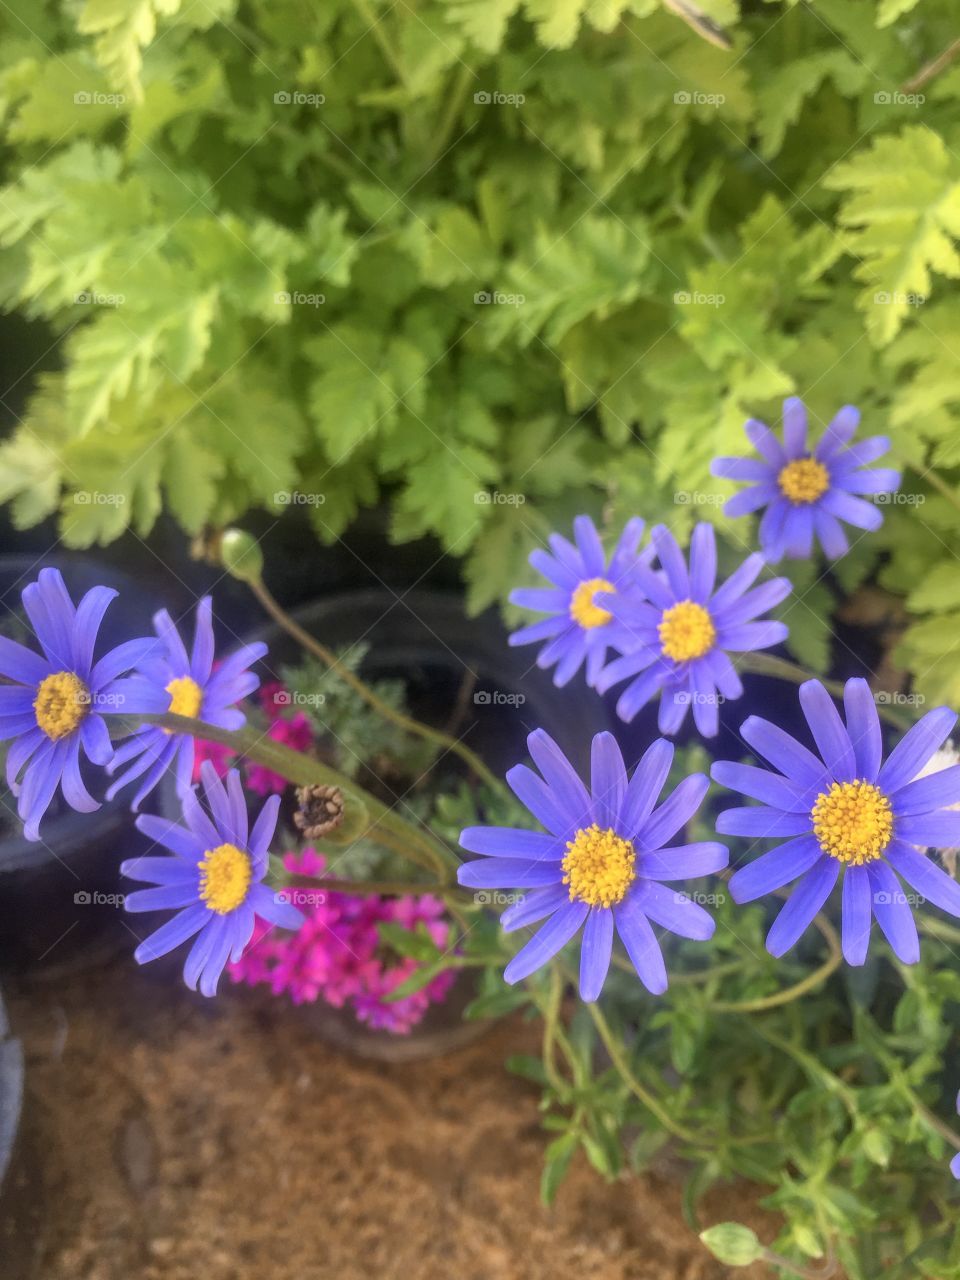 Flowers blue or purple?